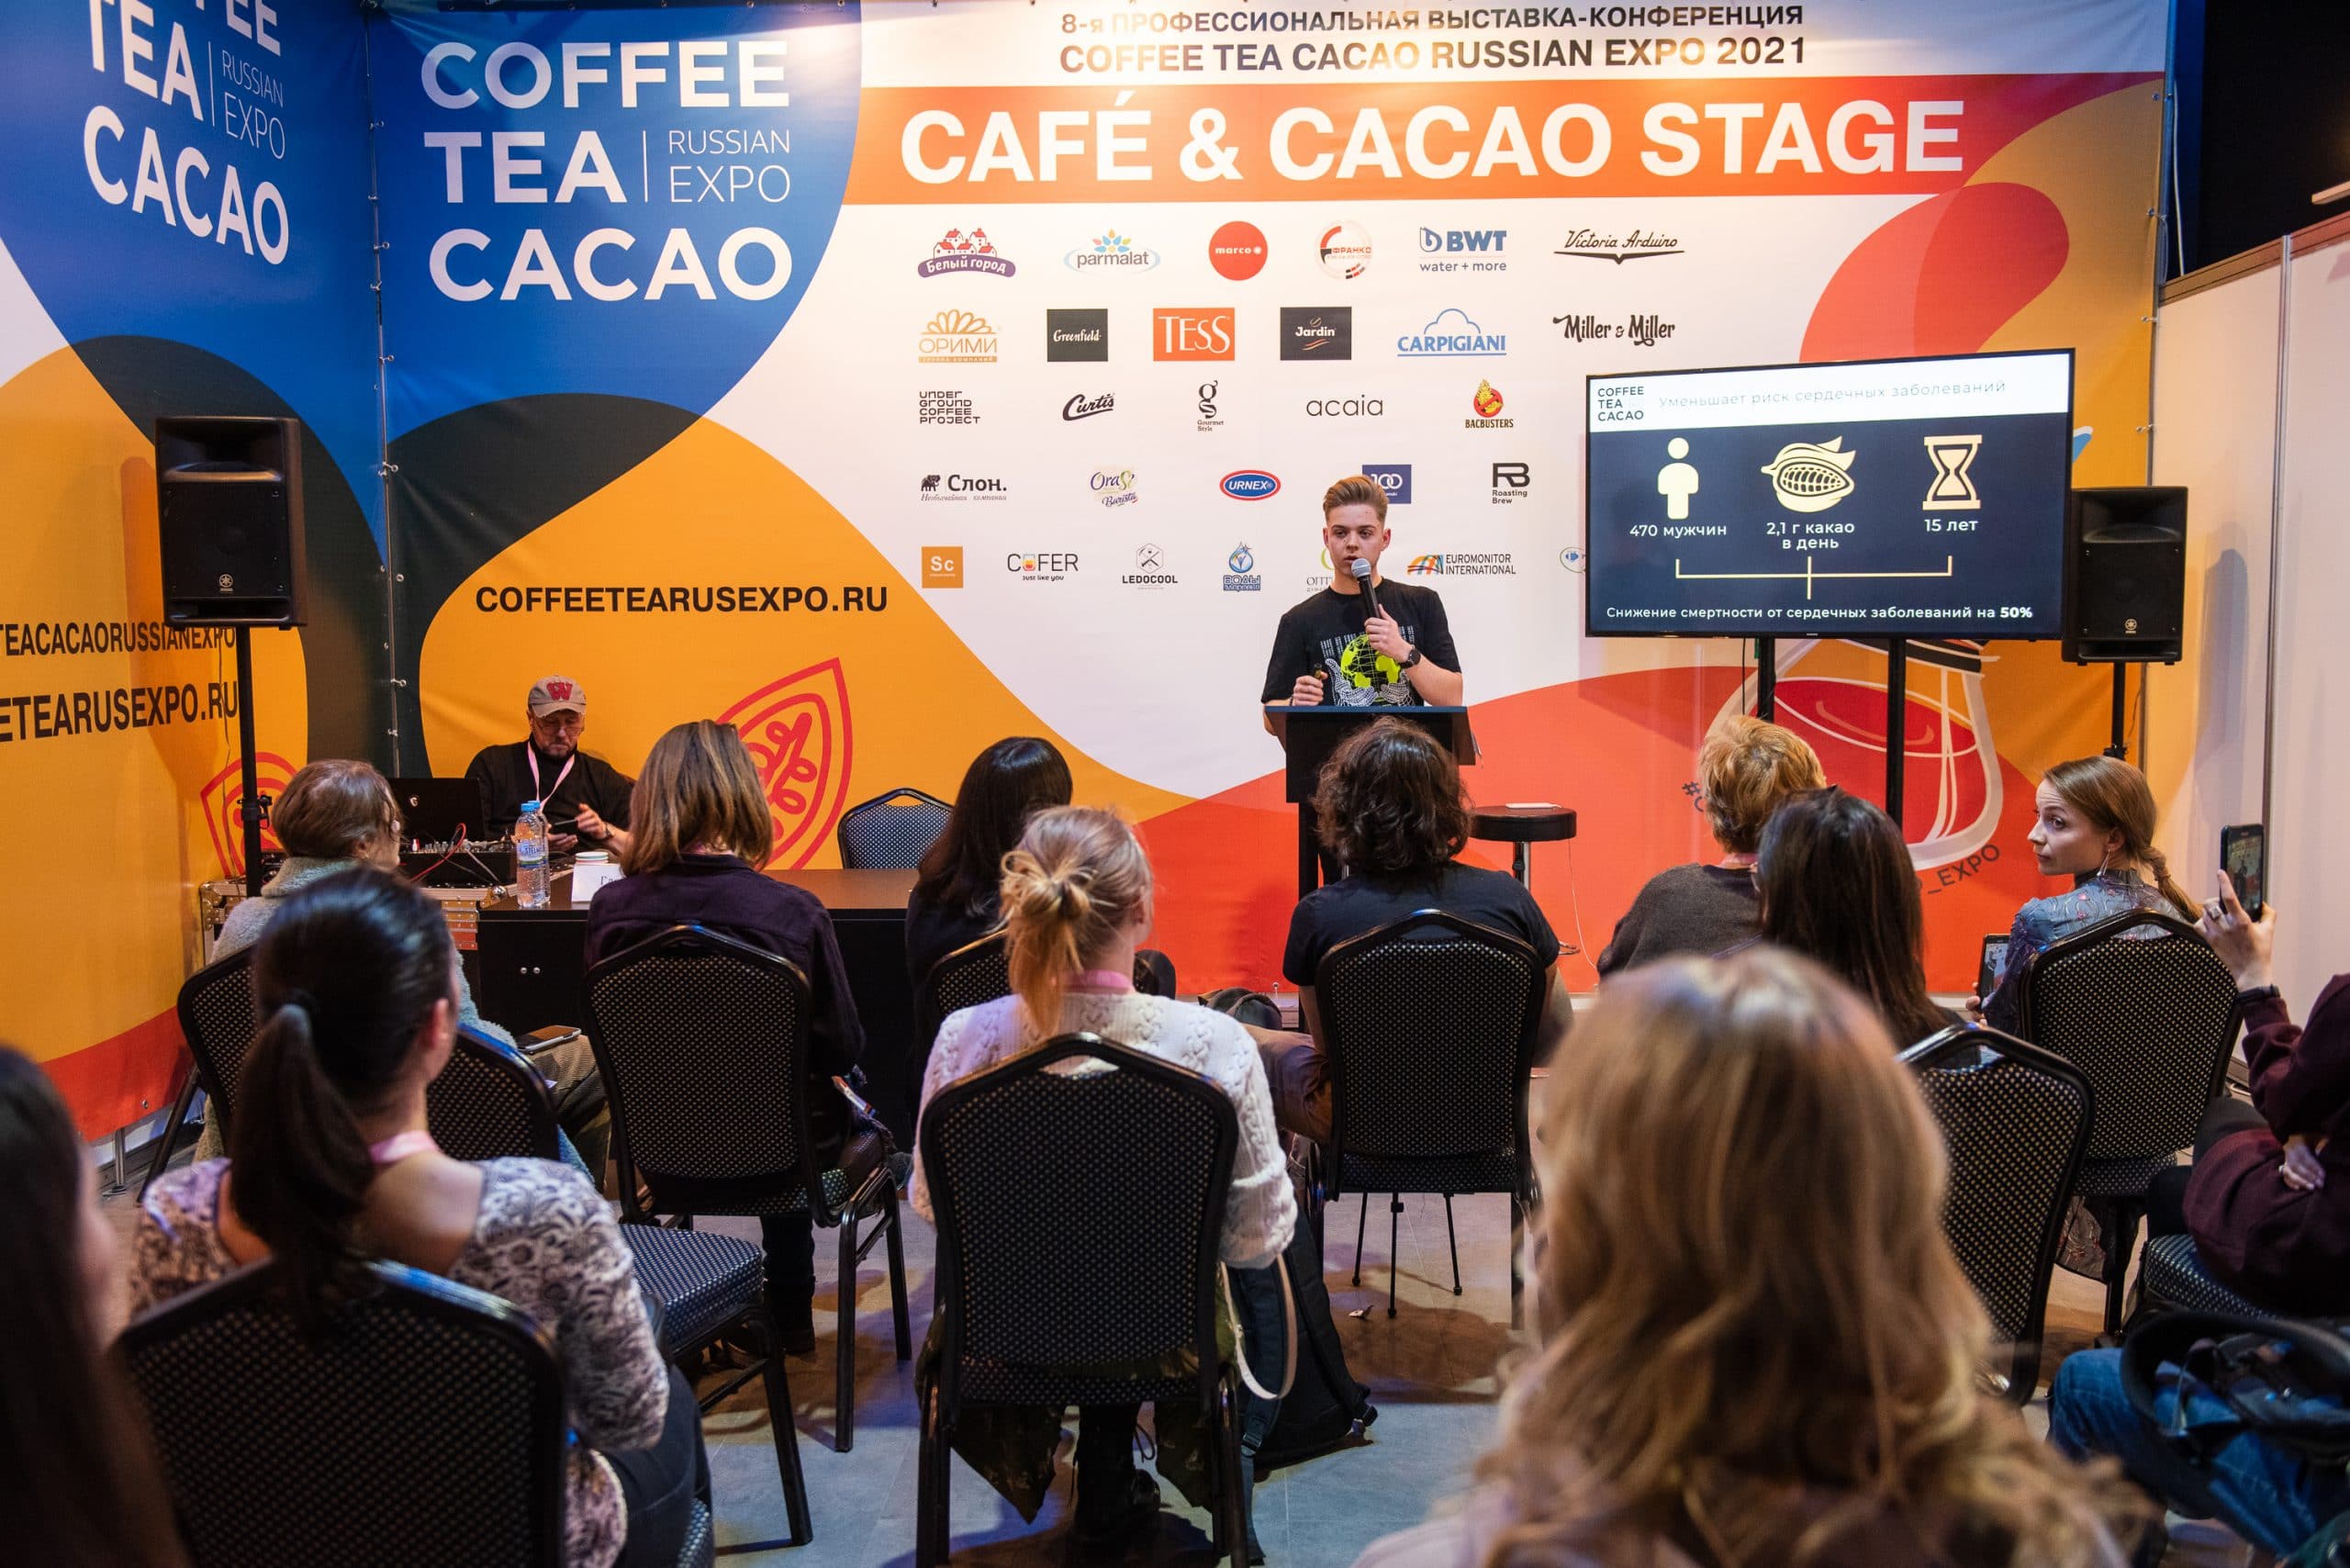 Coffee tea cacao 2024. Coffee Tea Cacao Russian Expo. Coffee Tea Cacao Expo 2023. Чай кофе какао выставка 2023. Coffee Tea Cacao Expo logo.